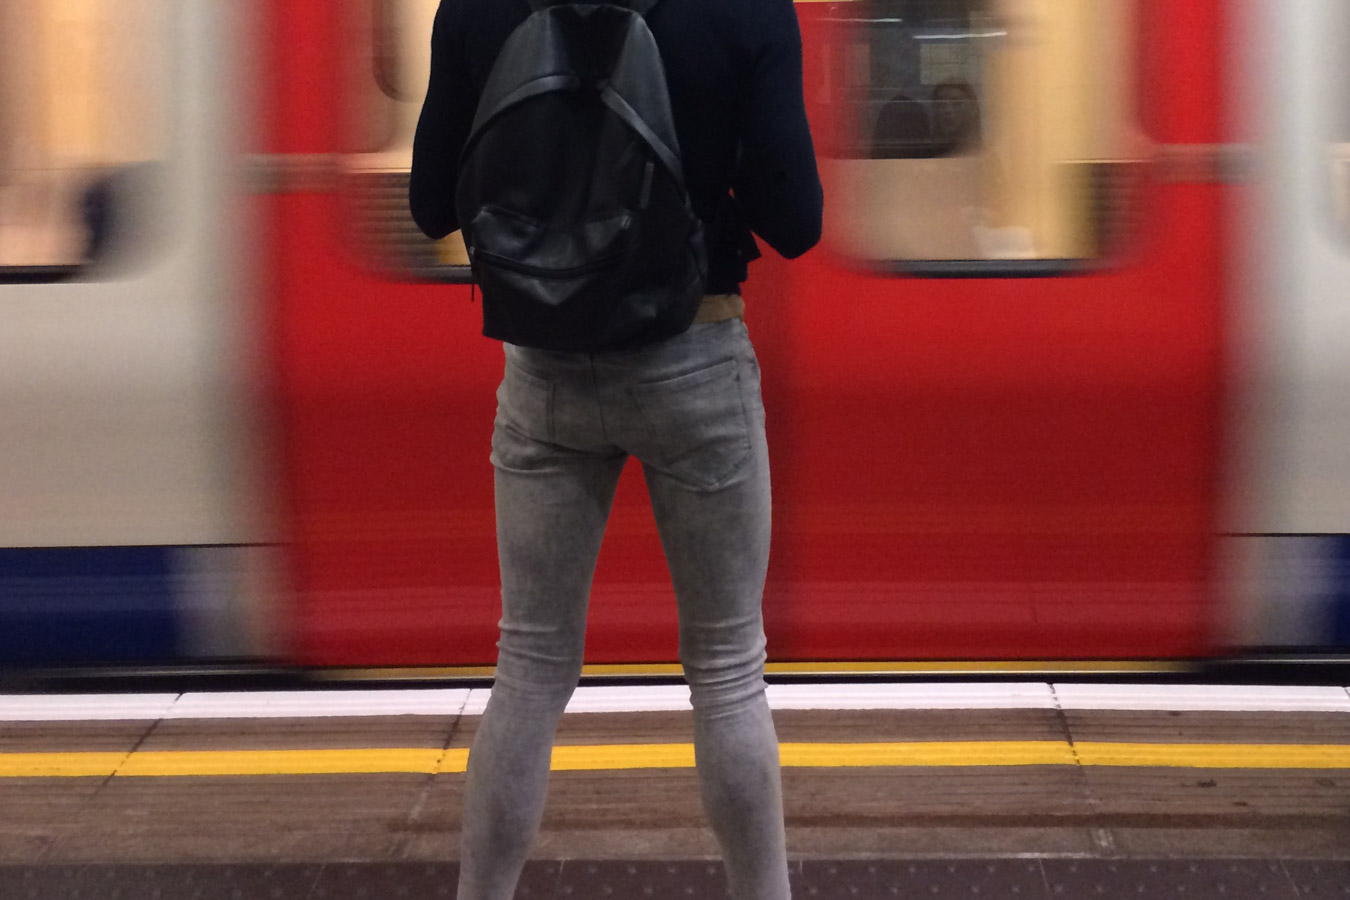 London Tube 